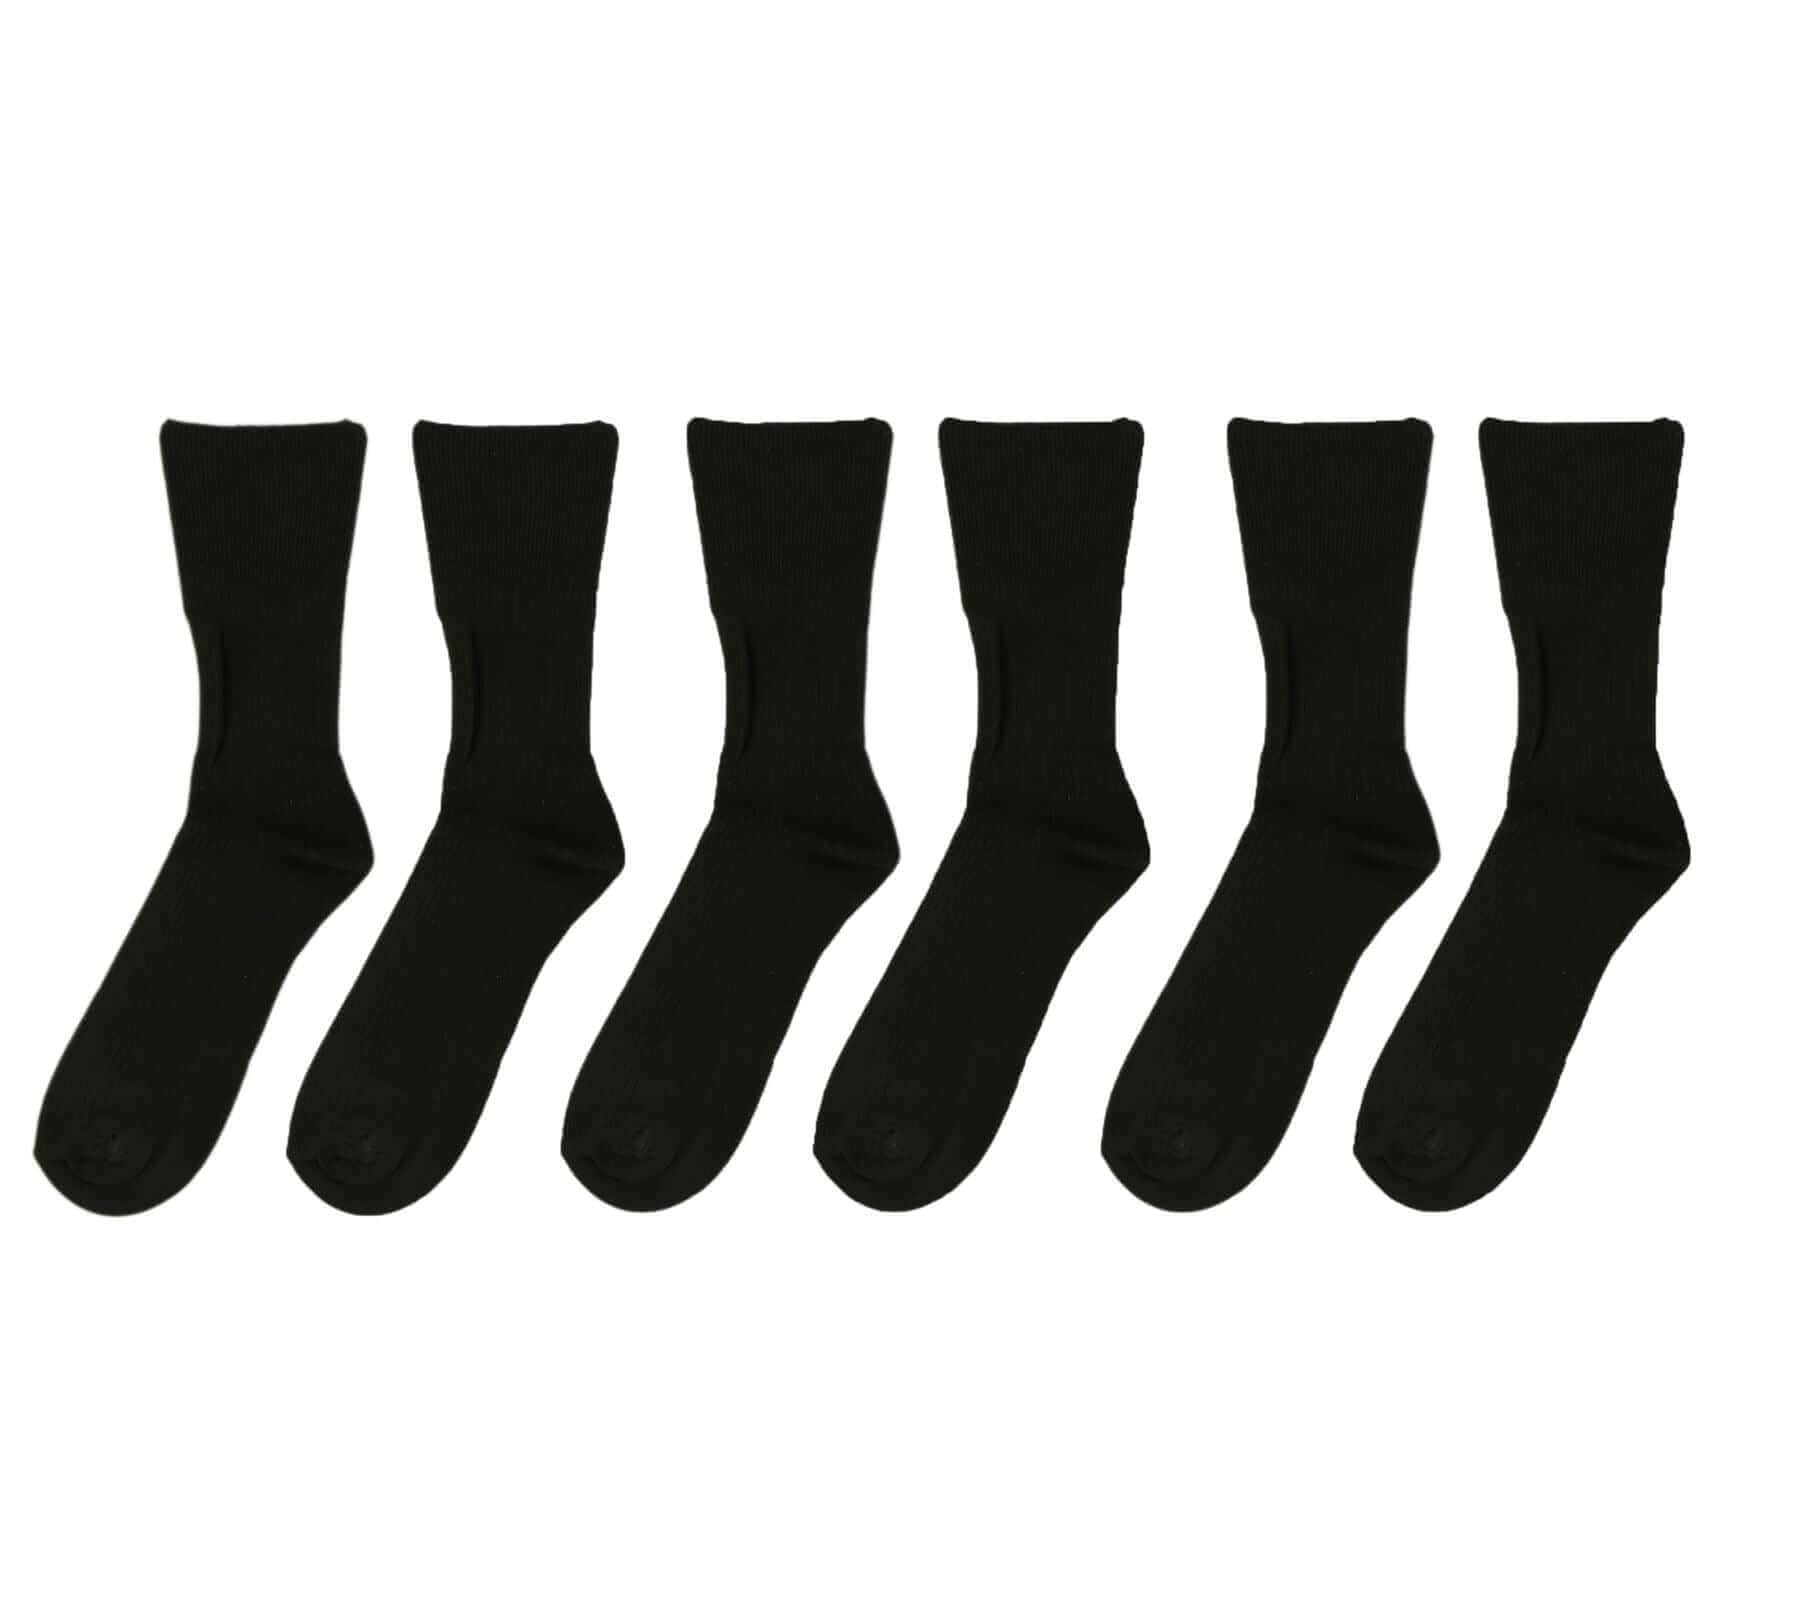 6 Pairs Of Men's Wellness Bamboo Socks, Diabetic Comfort Socks. Buy now for £9.00. A Socks by Sock Stack. 6-11, anti bacterial, assorted, bamboo, black, boot, boot socks, boys socks, breathable, comfortable, cosy, cotton, diabetic, dress socks, loose top,